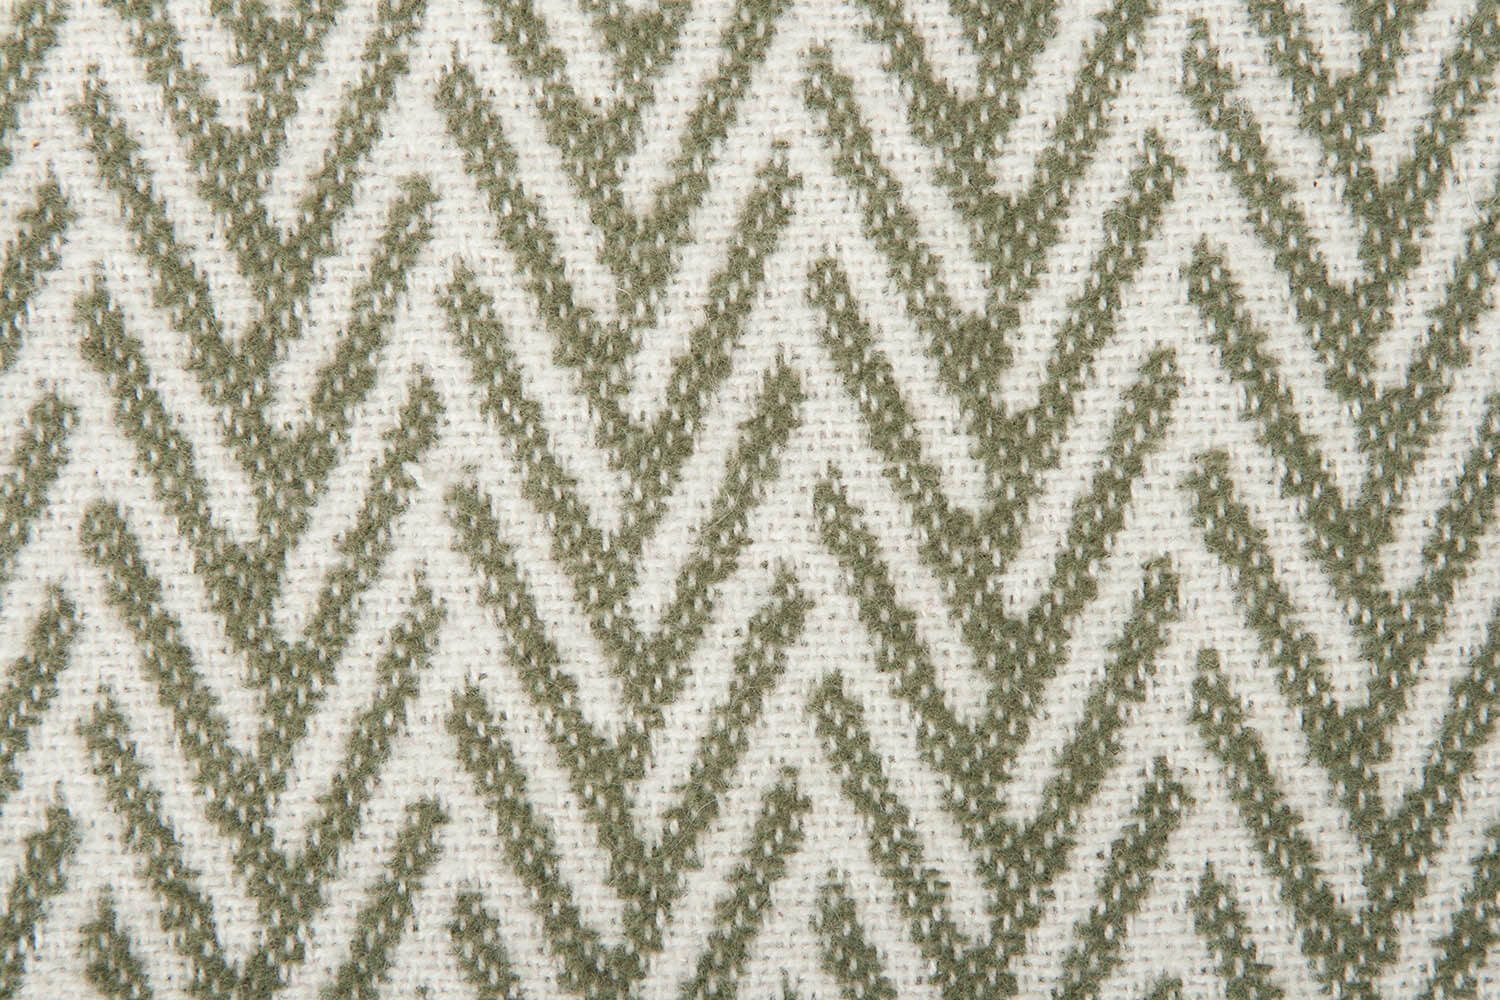 Tweedmill-plaid-VGW-Visgraat-Olijf-groen-wit-katoen-dekentje